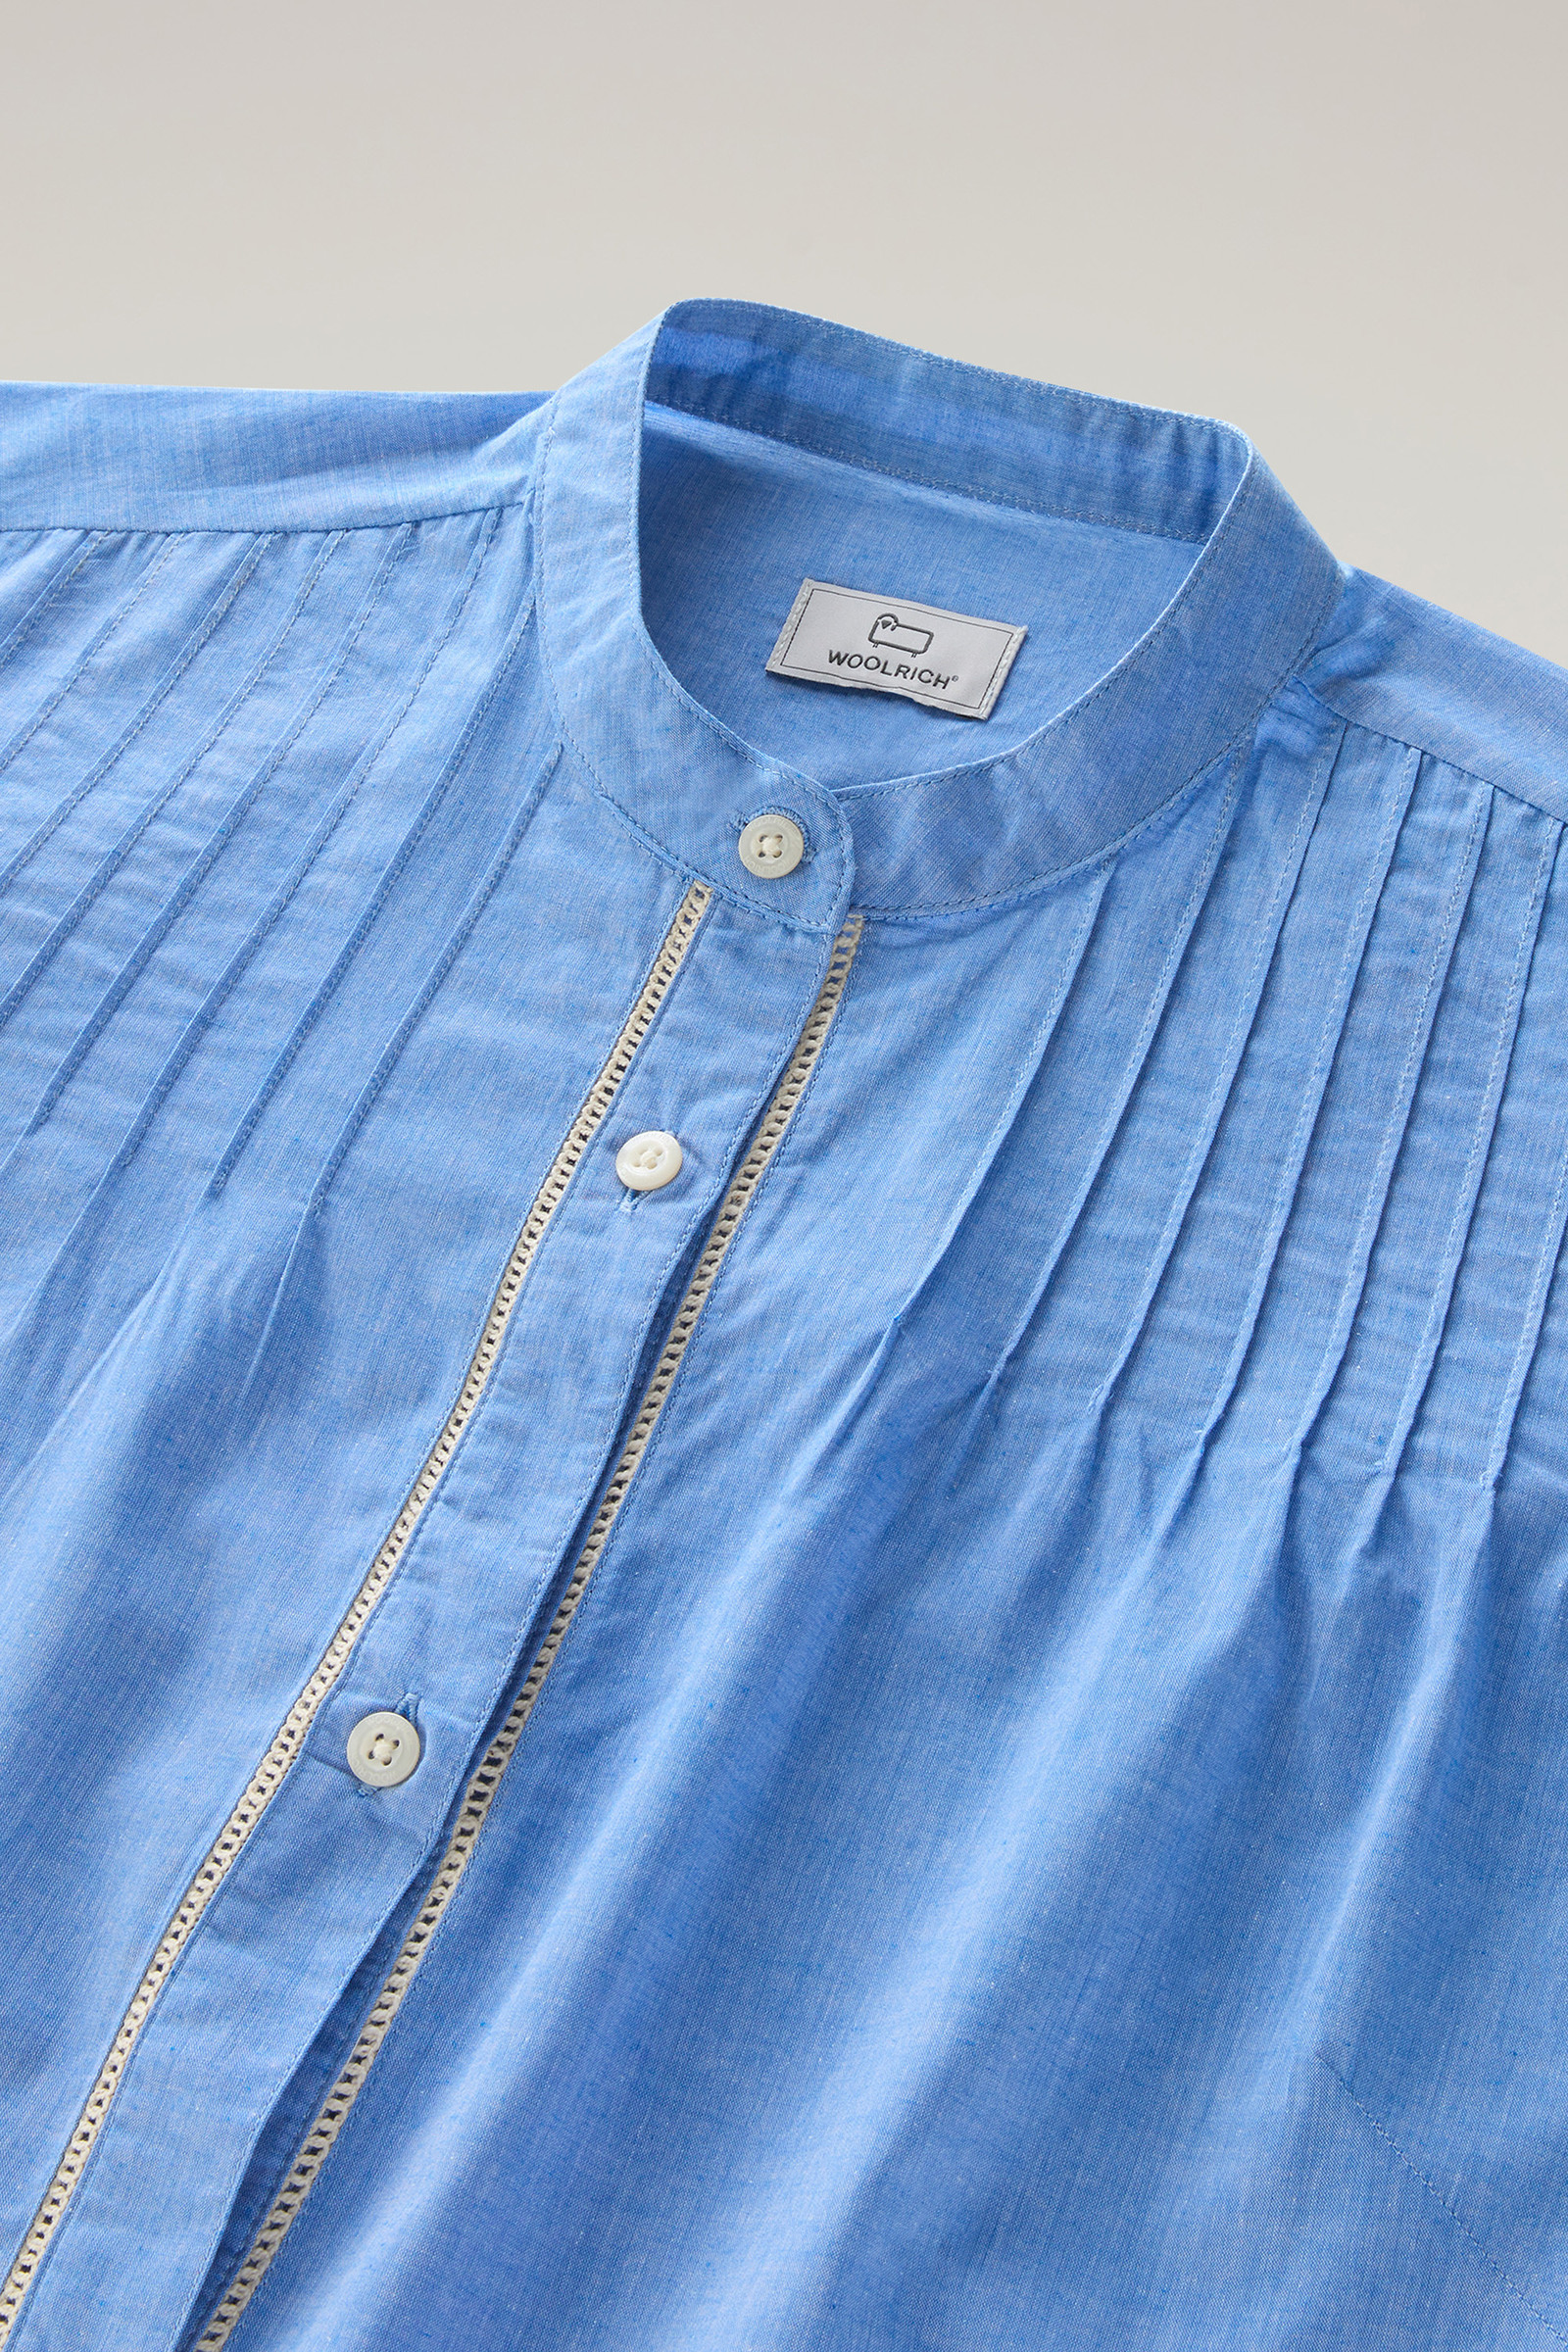 Women's Pintuck Shirt in Pure Cotton Chambray Blue | Woolrich NO